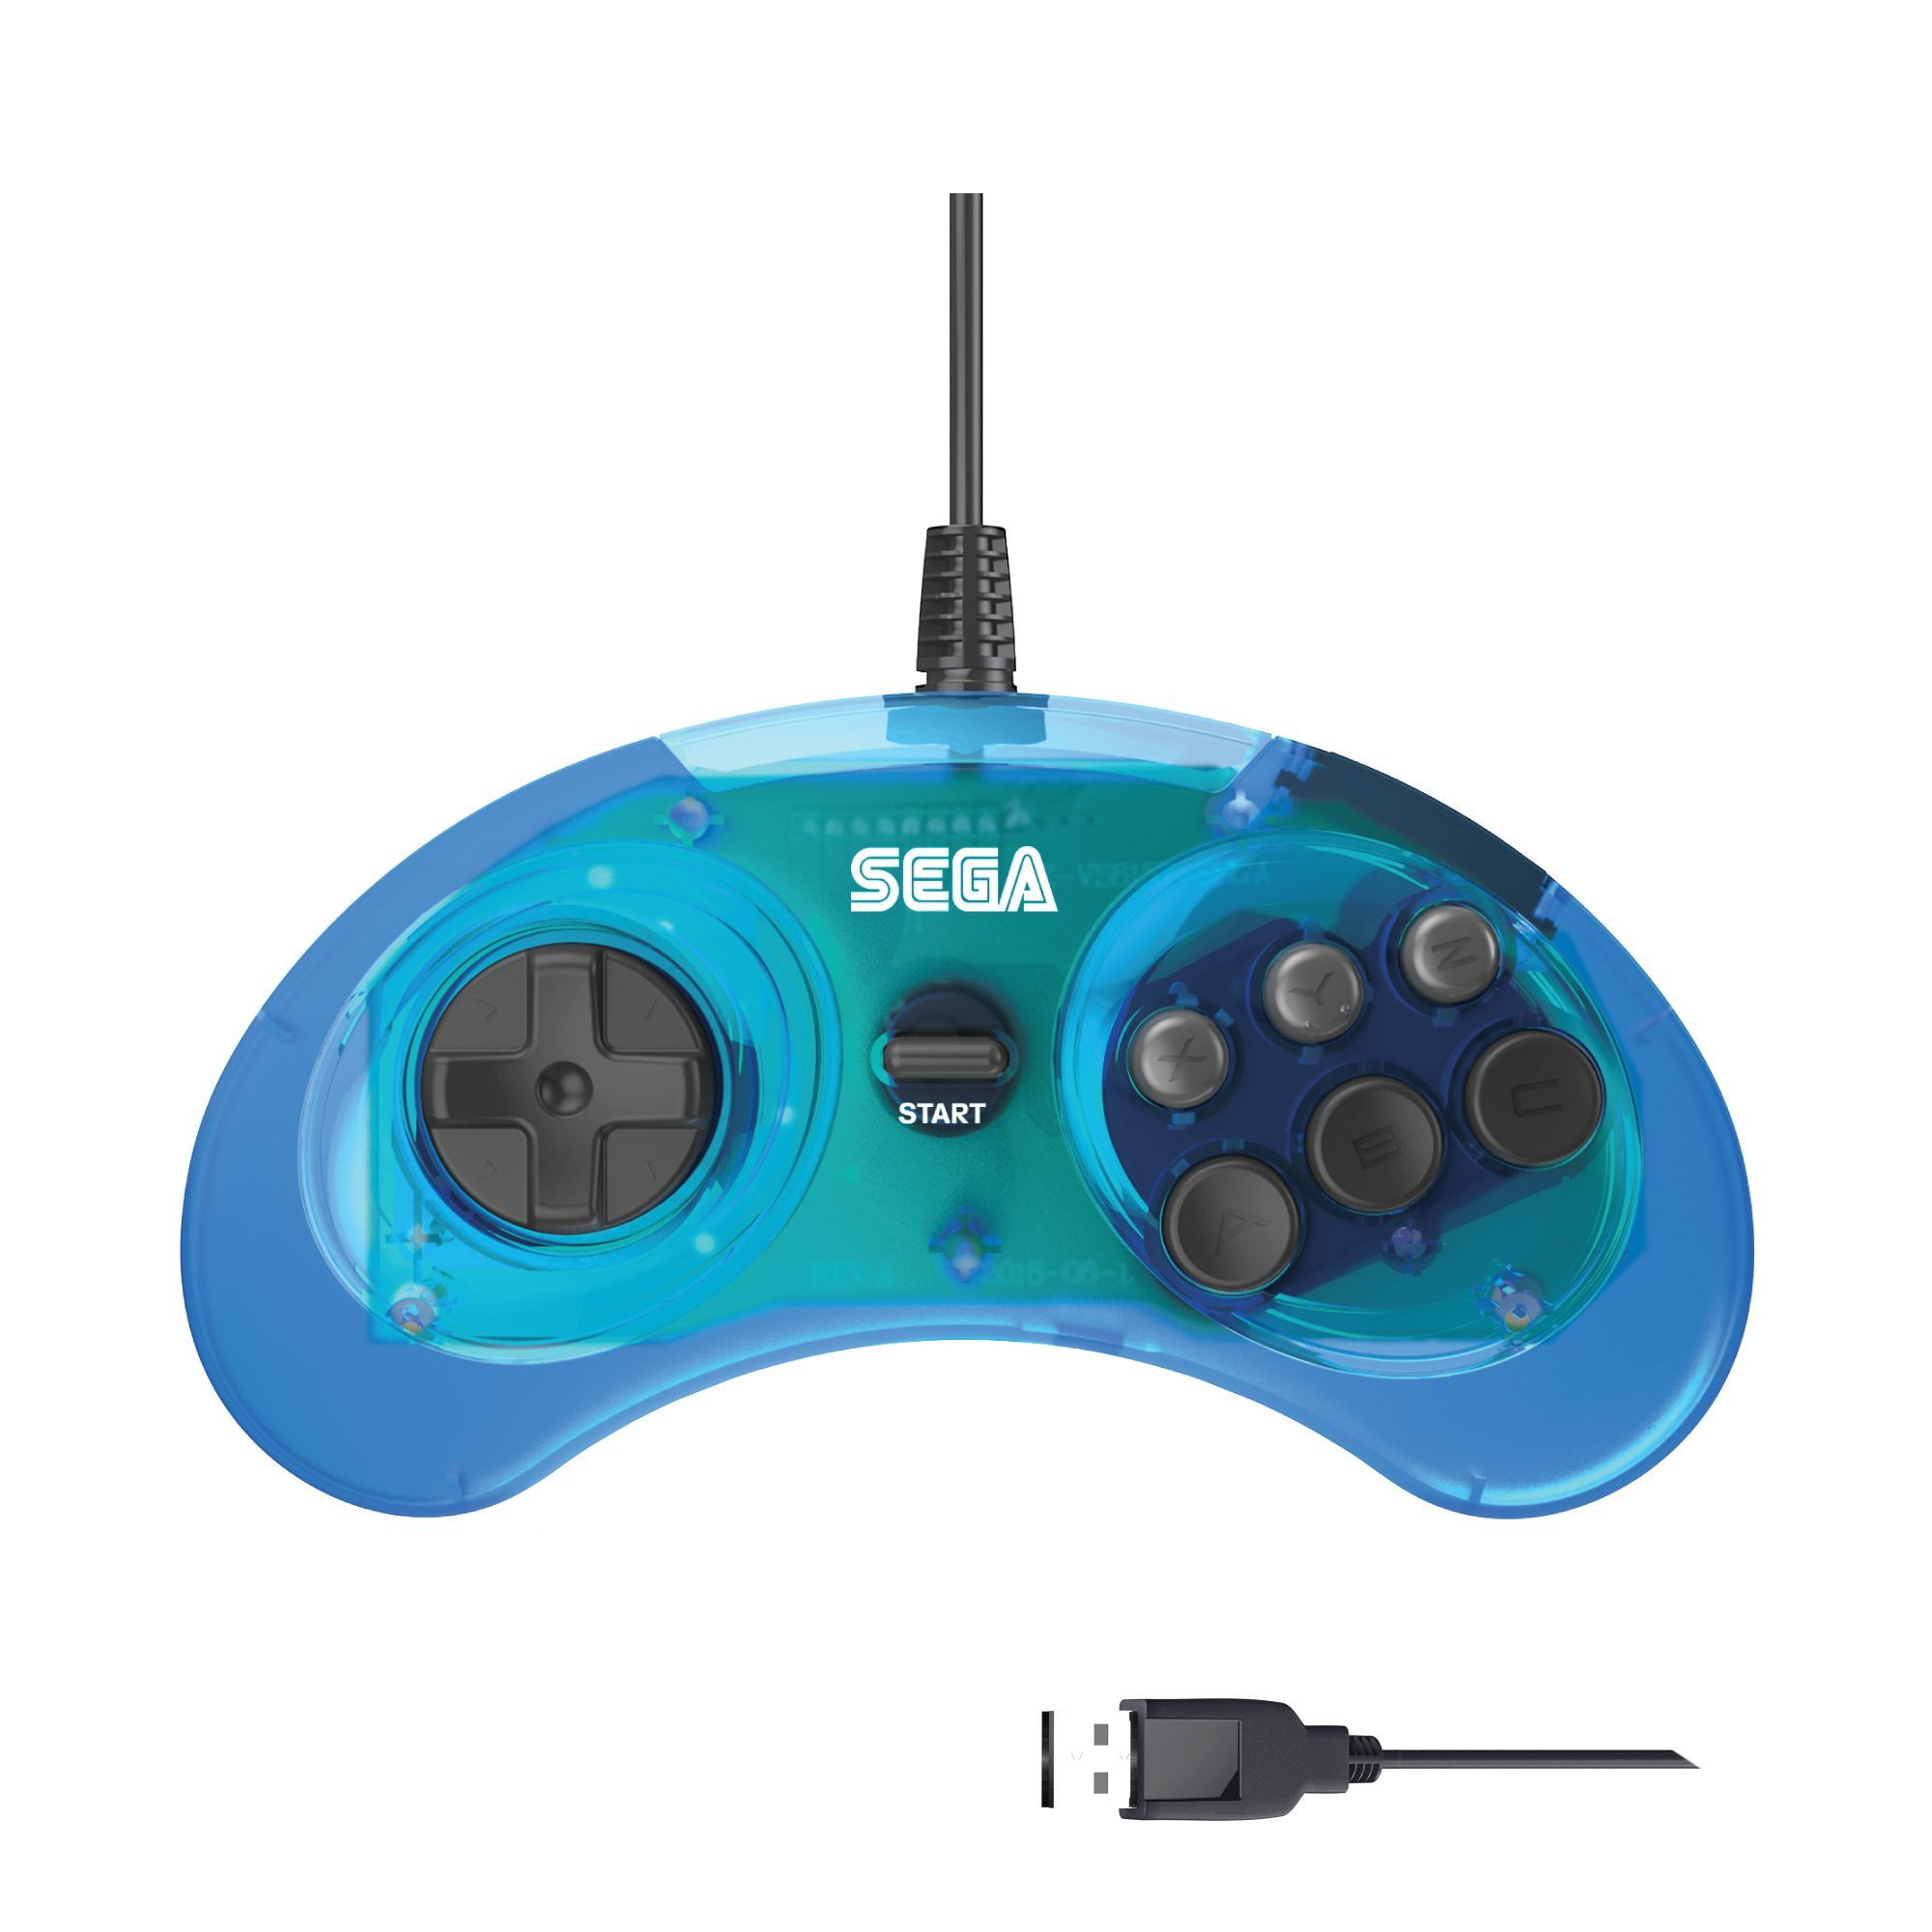 SEGA Genesis® 6-button Arcade Pad, Blue - image 1 of 2